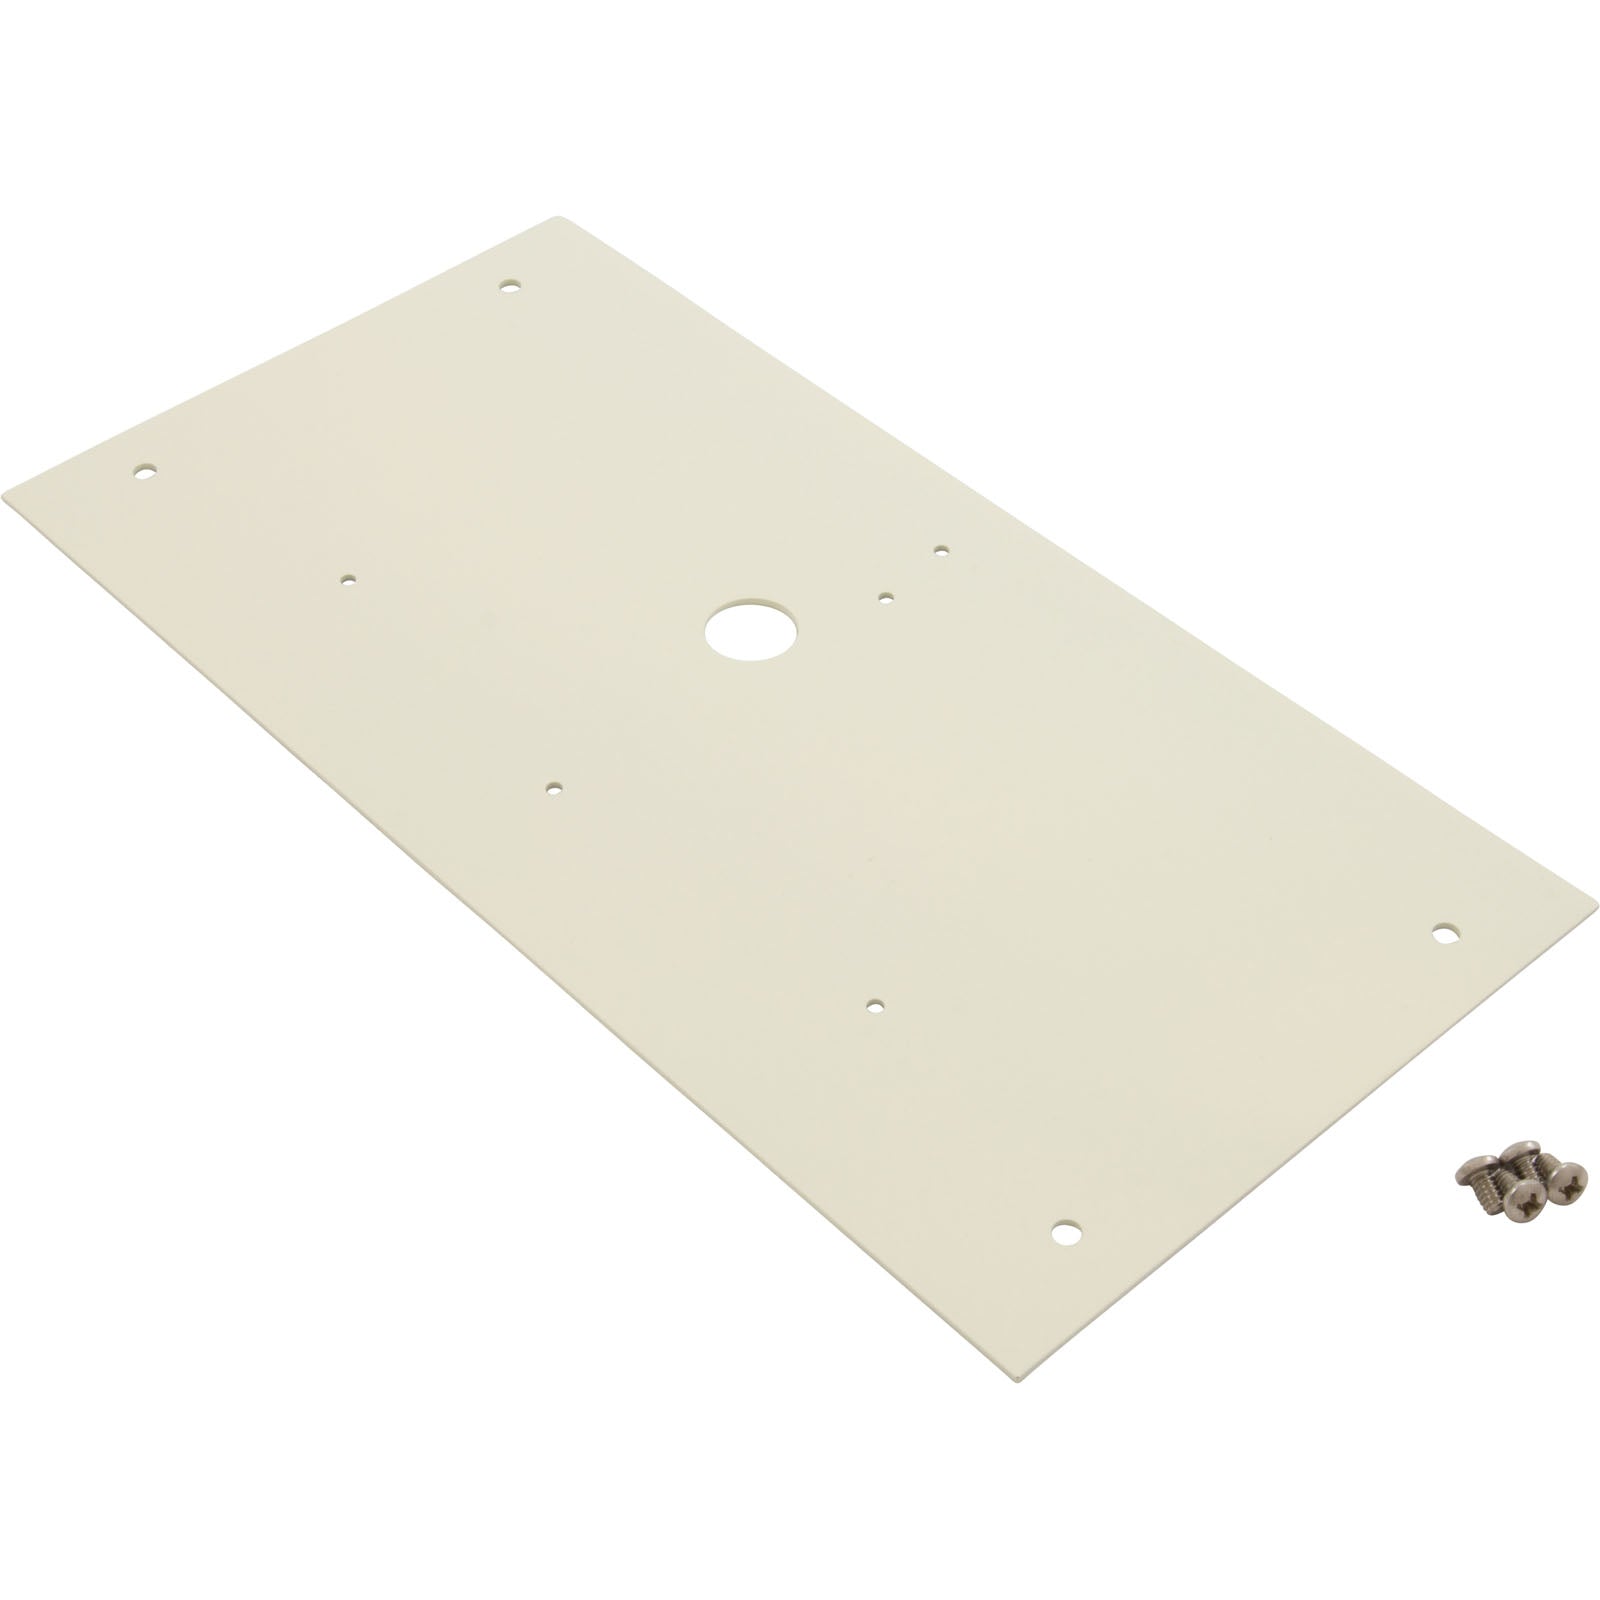 Wallmount Plate, Pentair, Compool, 5" x 10" PLATE3000